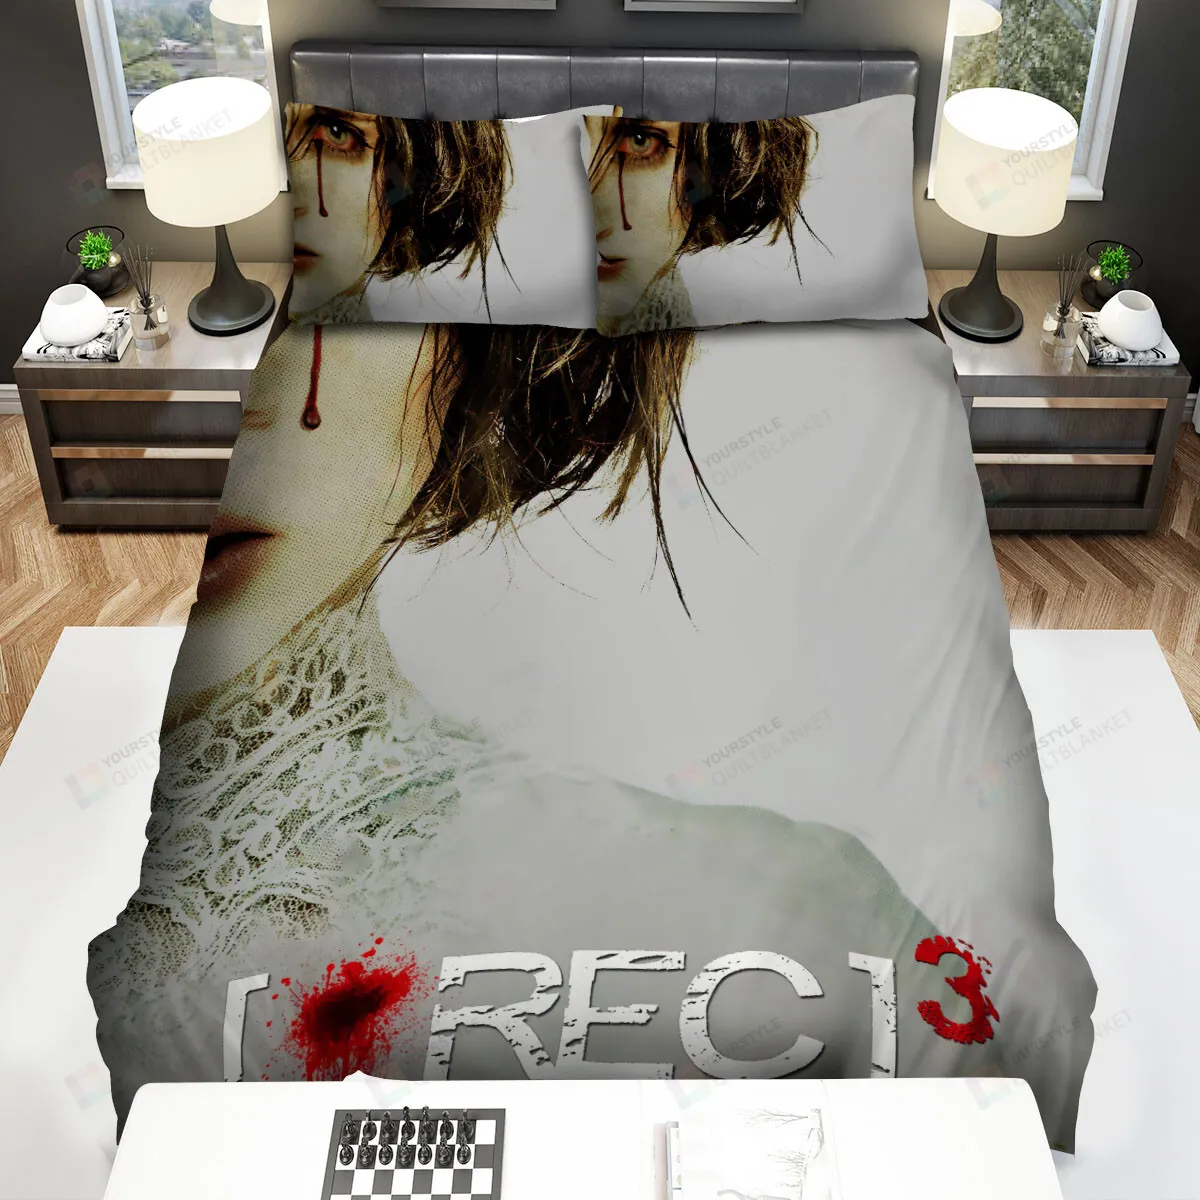 Rec 3 Genesis (2012) Poster Bed Sheets Spread Comforter Duvet Cover Bedding Sets